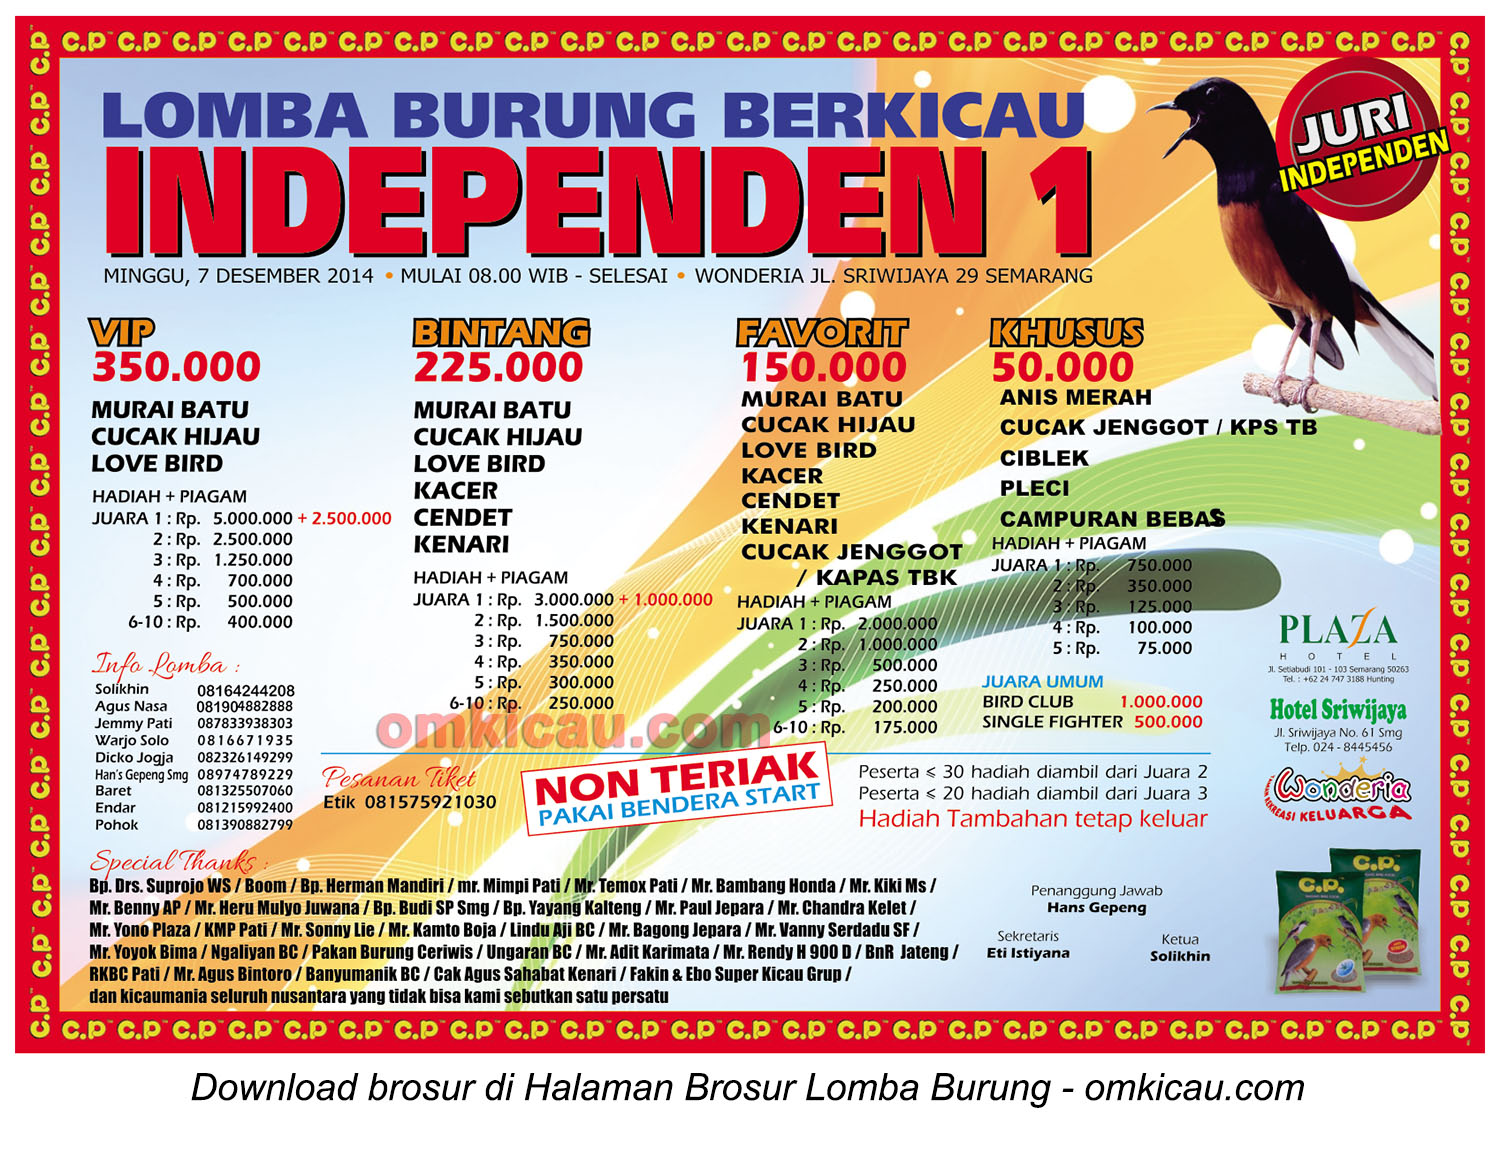 Brosur Lomba Burung Berkicau Independen 1, Semarang, 7 Desember 2014